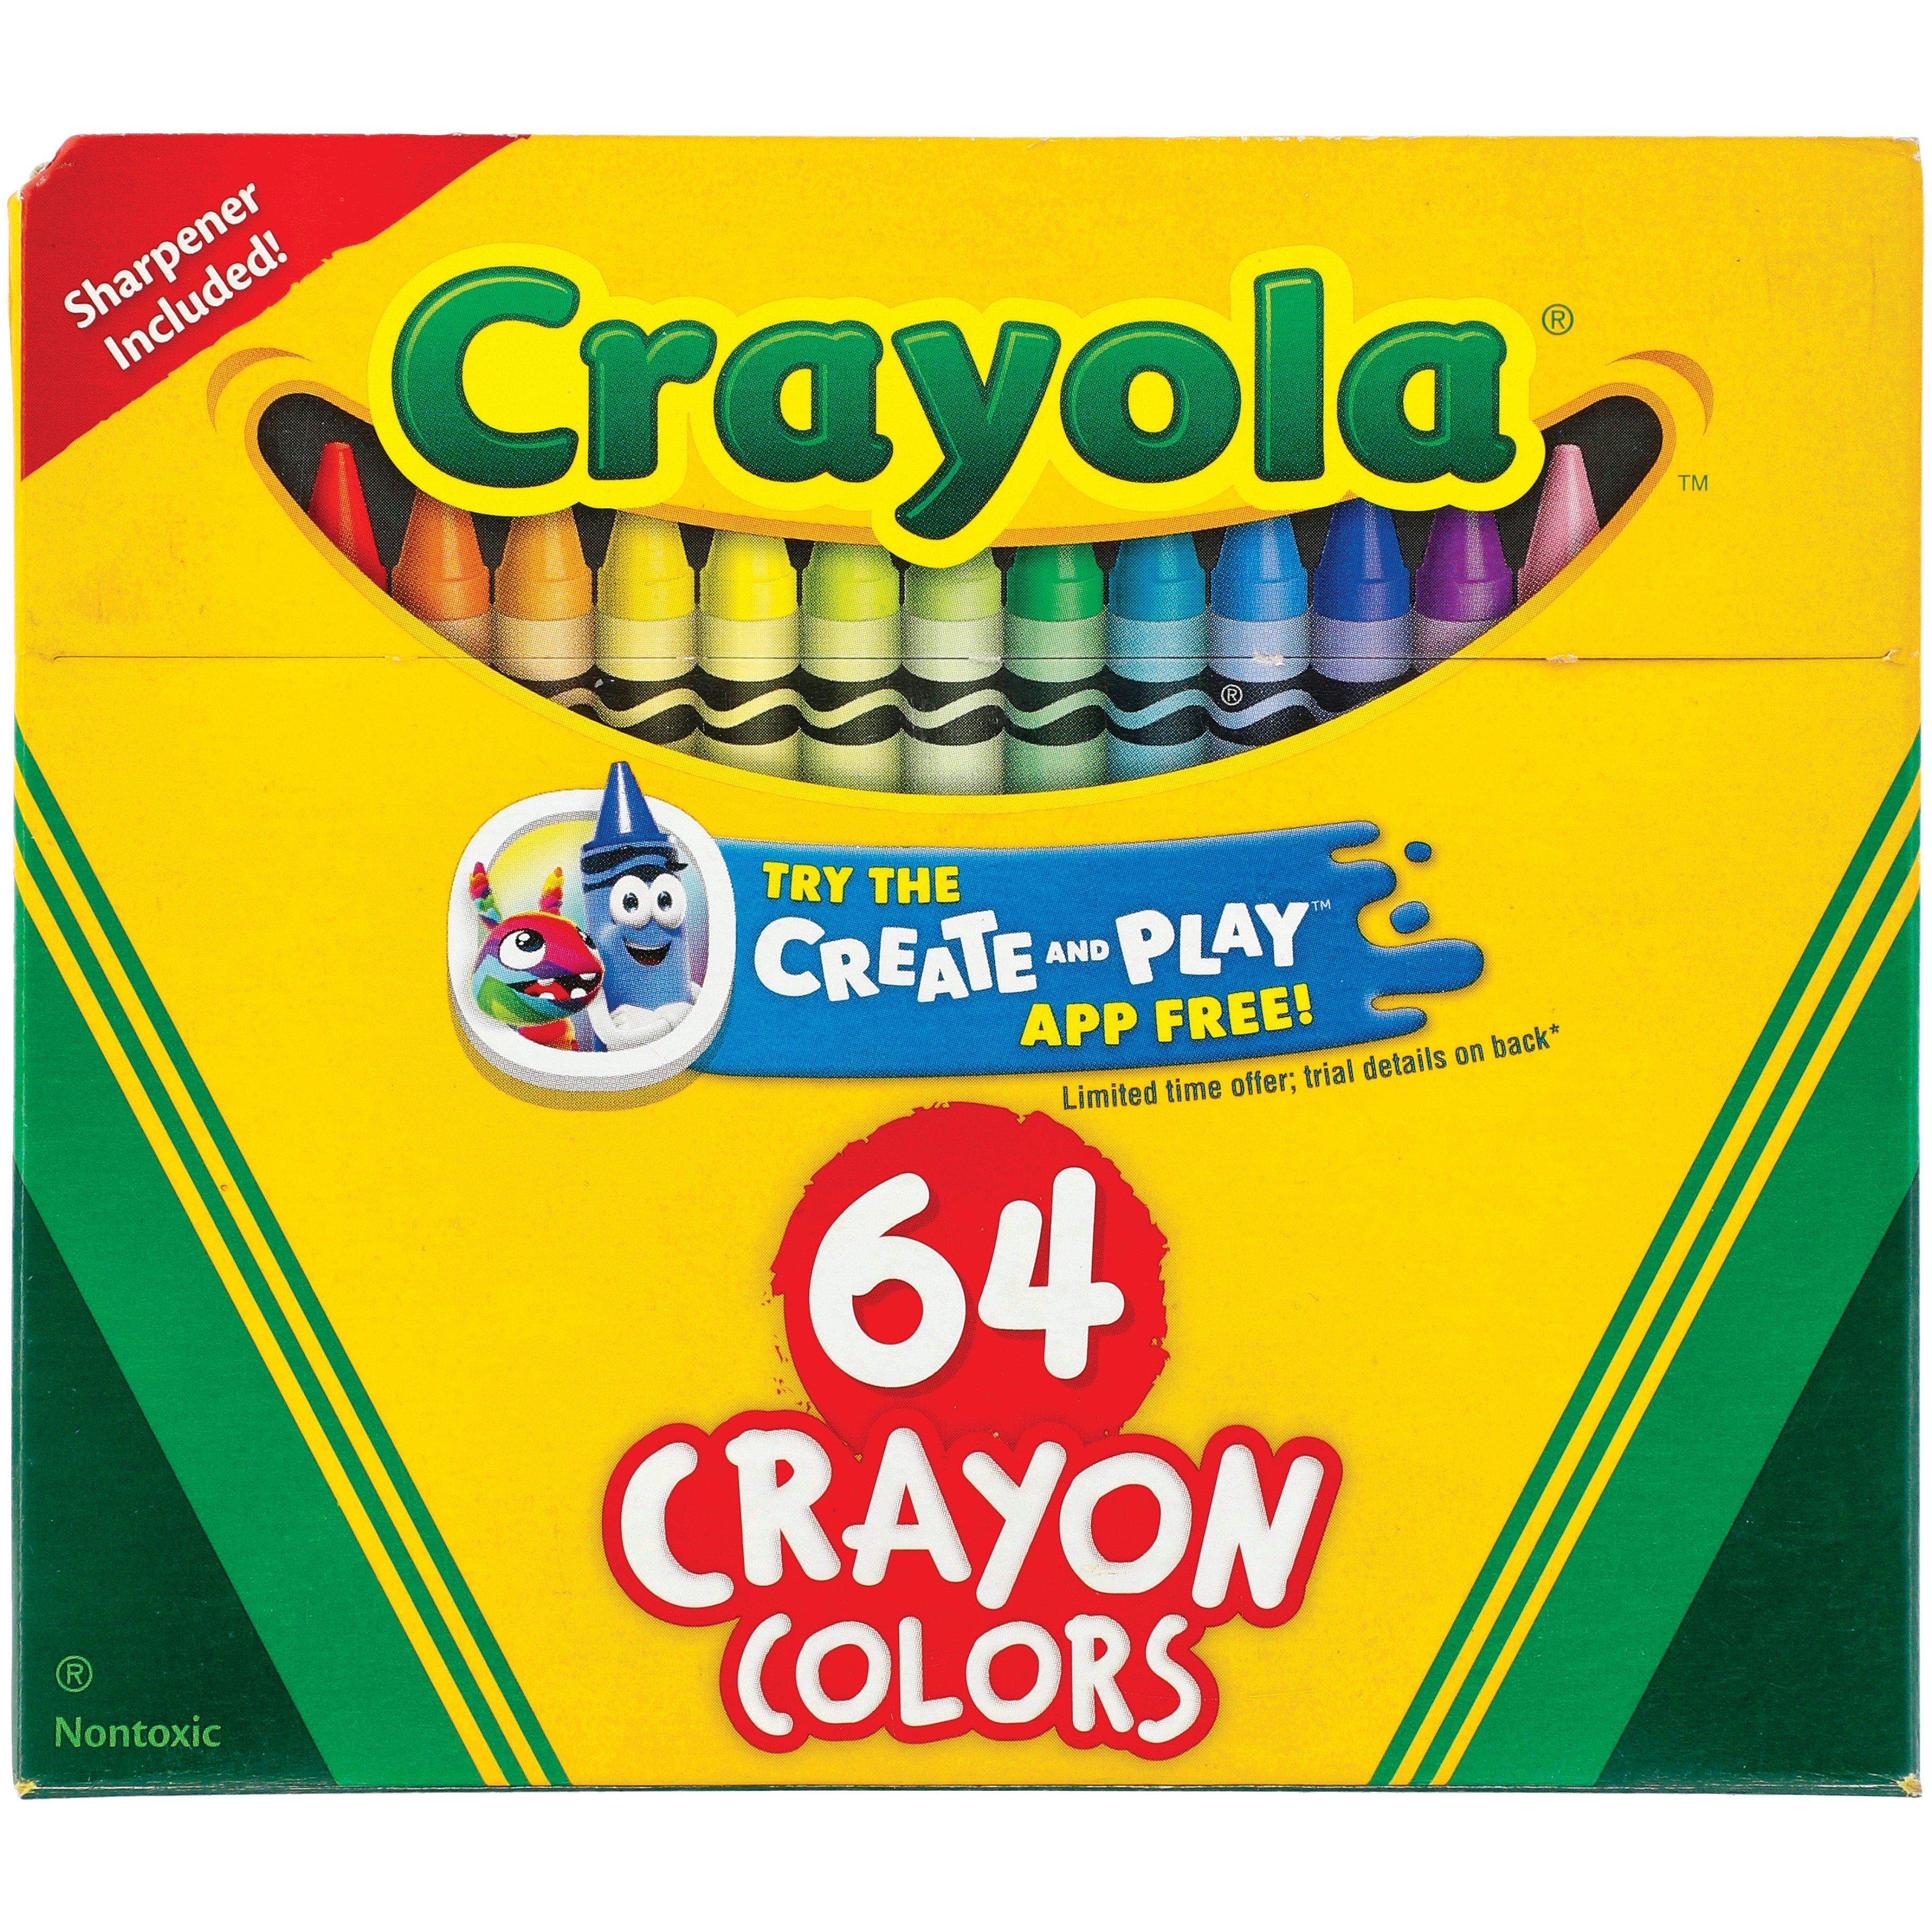 Crayola Erasable Colored Pencils - Shop Colored Pencils at H-E-B